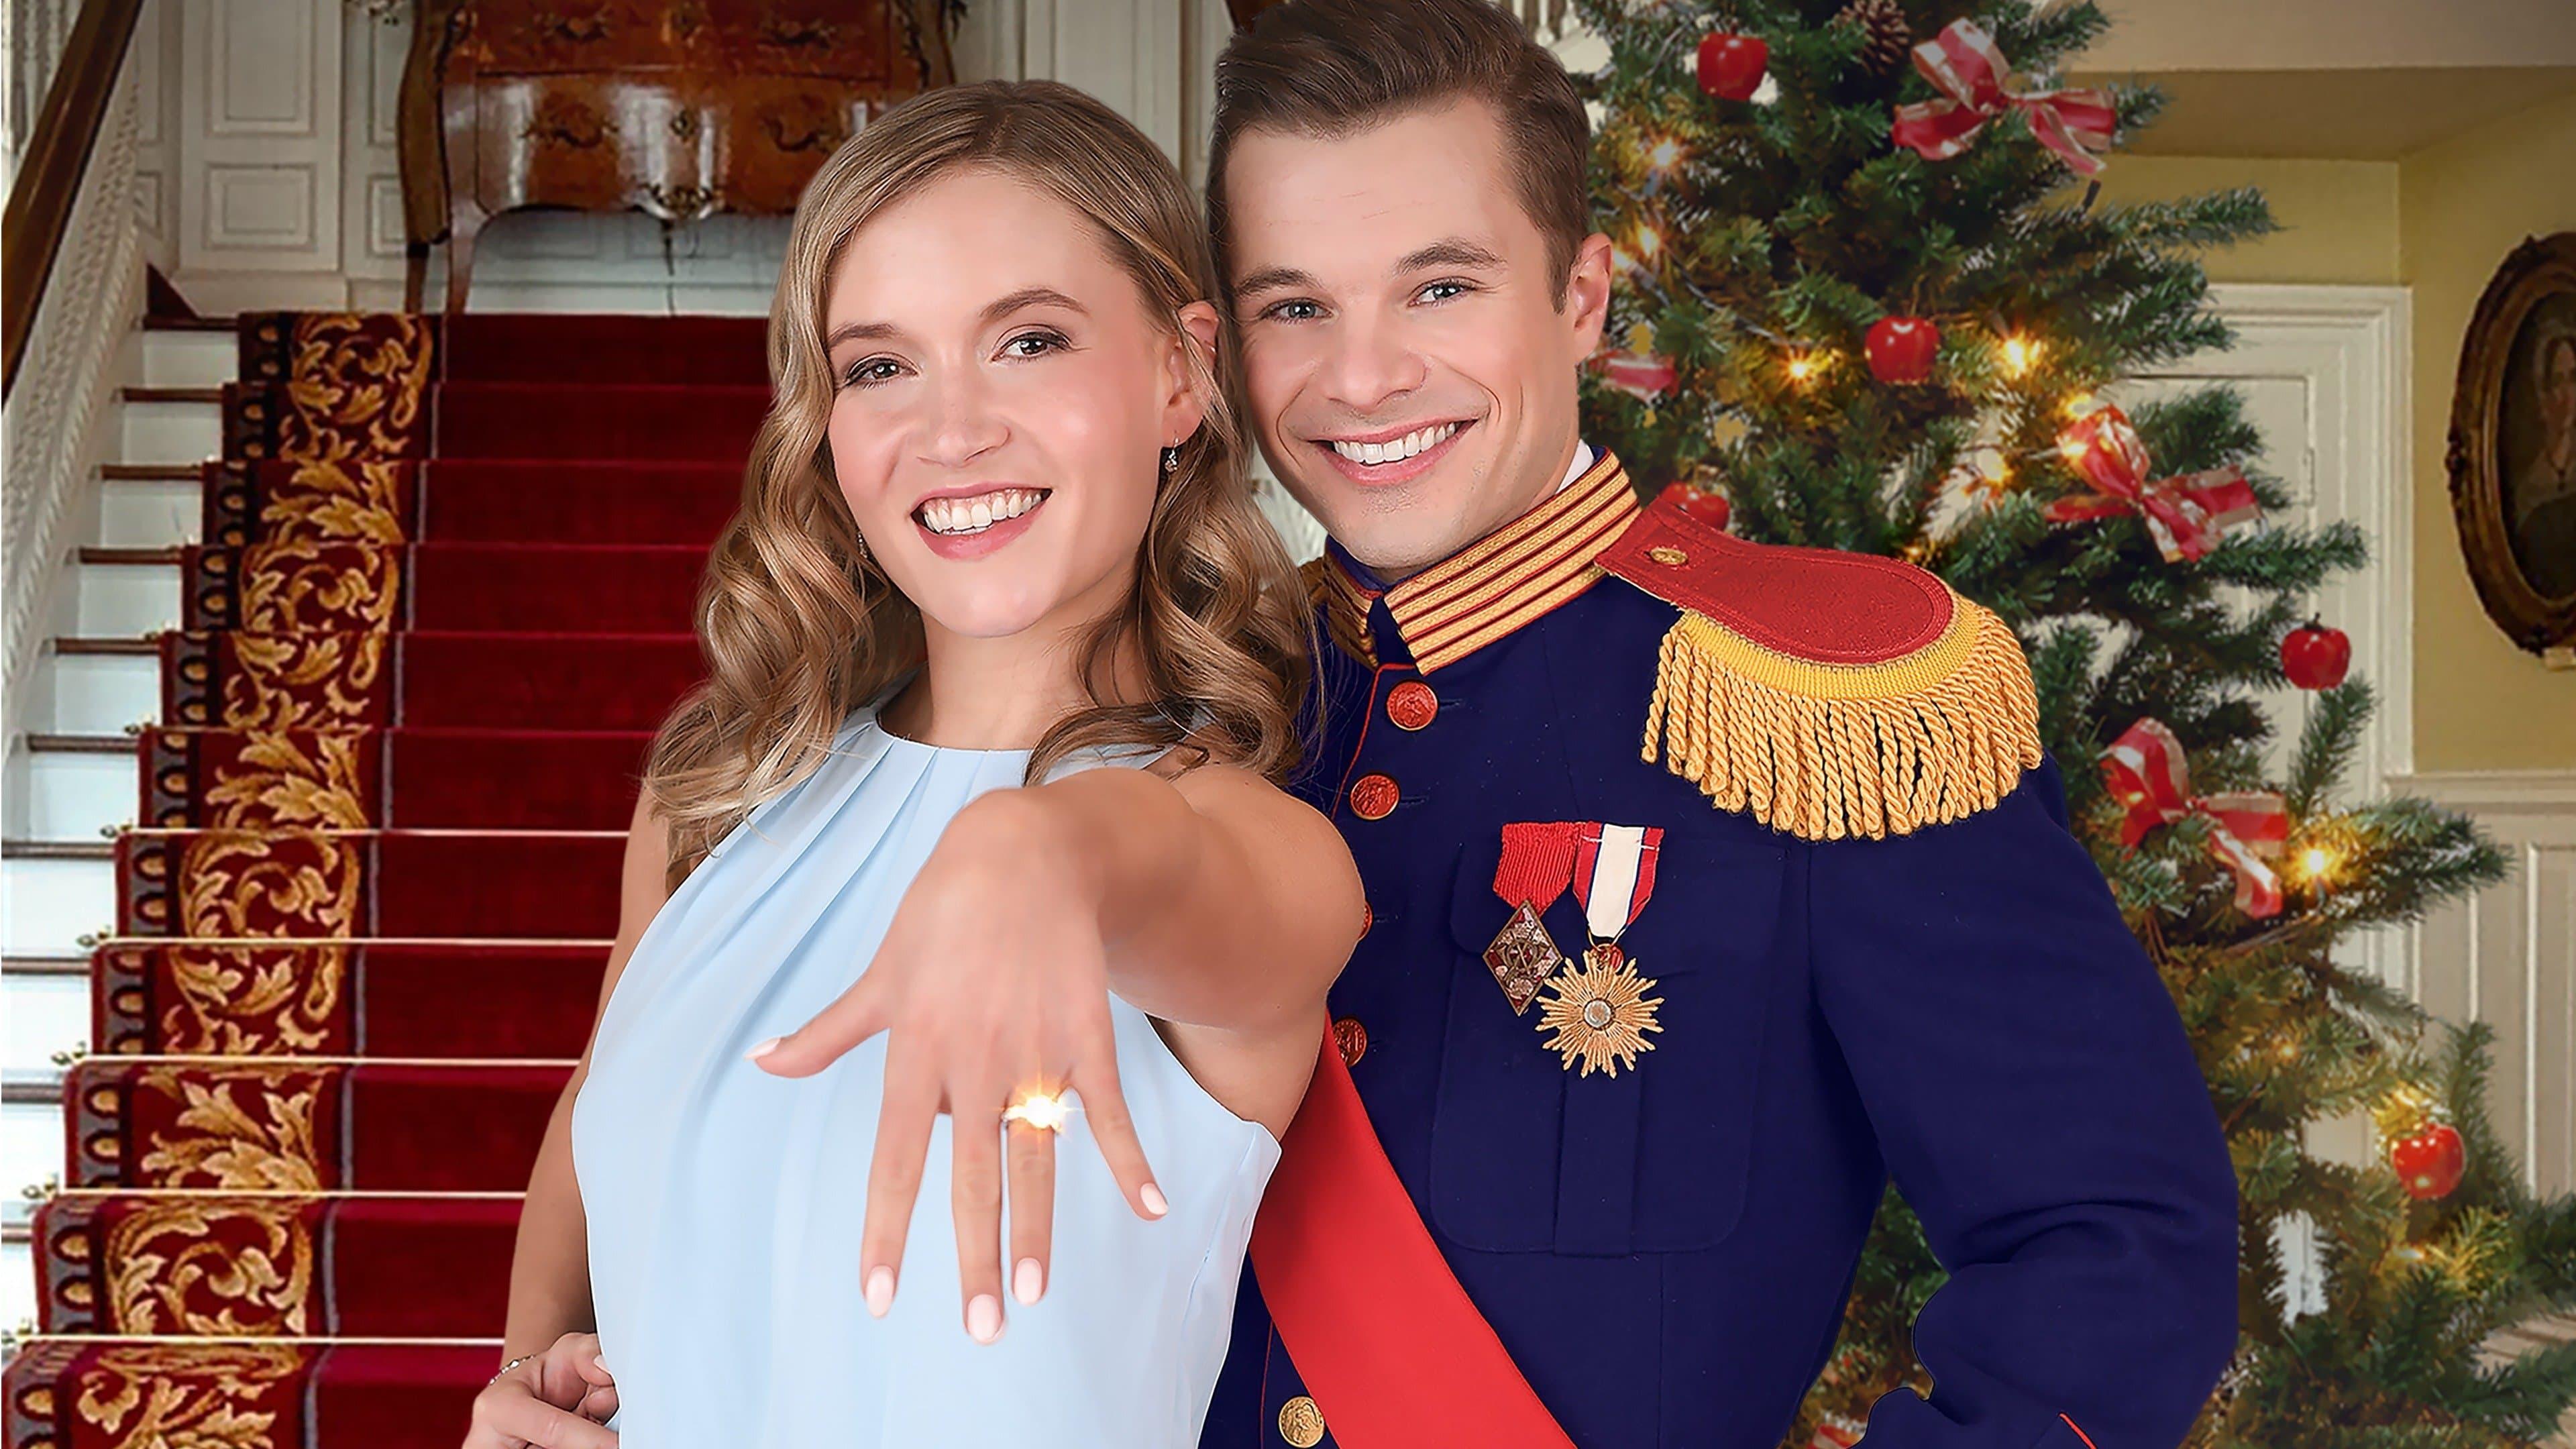 A Royal Christmas Engagement backdrop